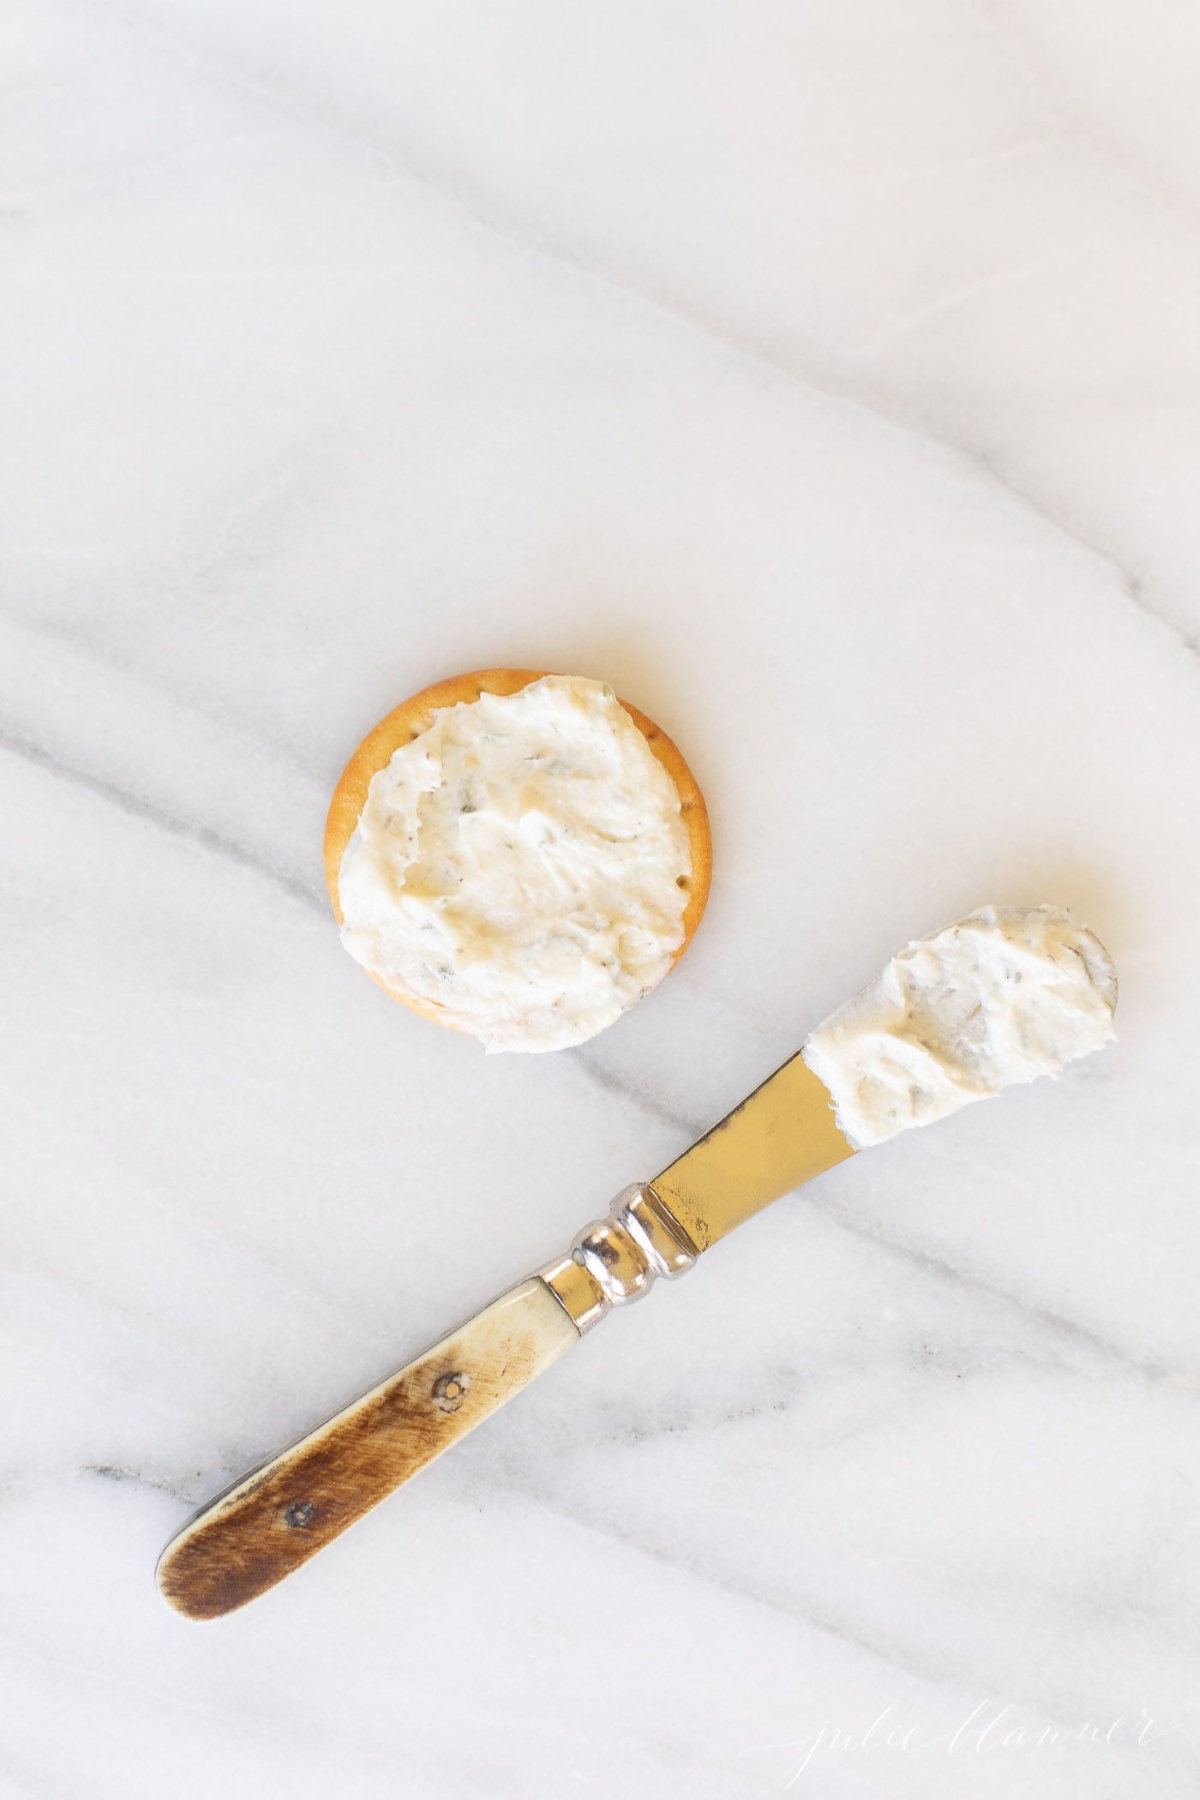 A spreader knife, spreading homemade Boursin cheese on a cracker.